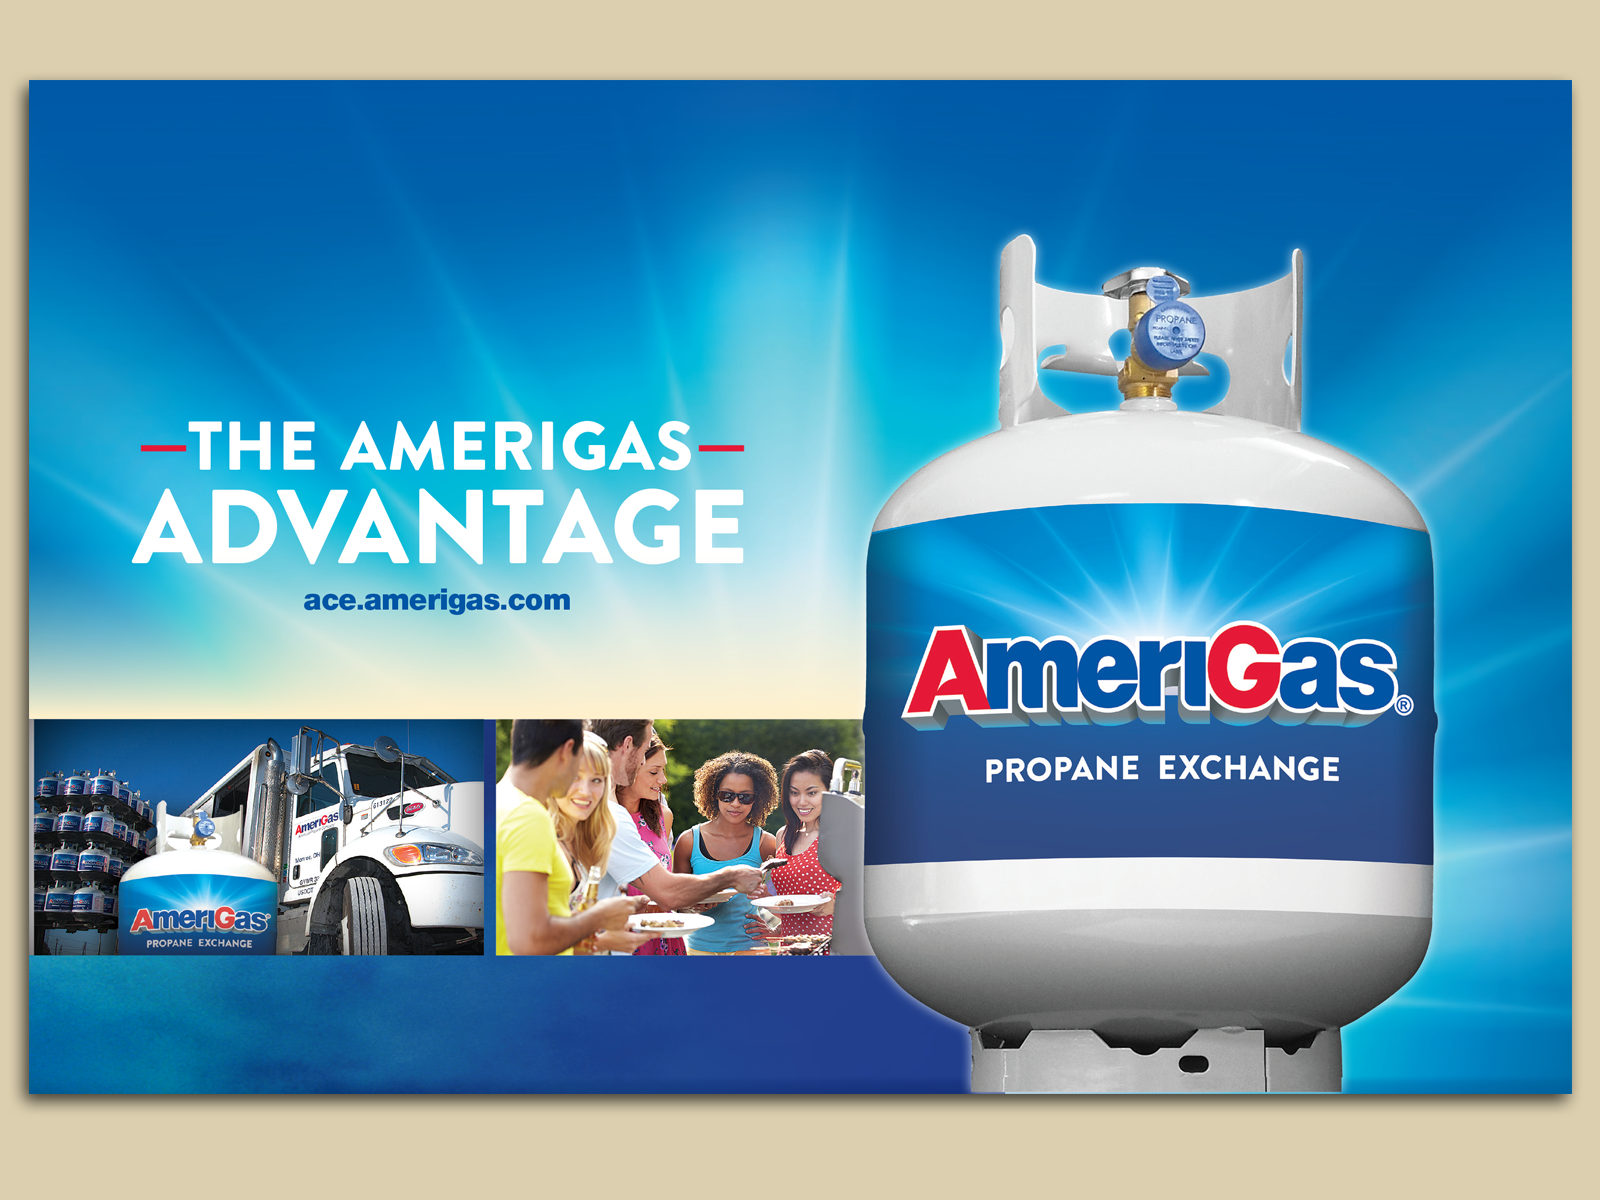 amerigas-propane-exchange-guide-by-afa-design-on-dribbble